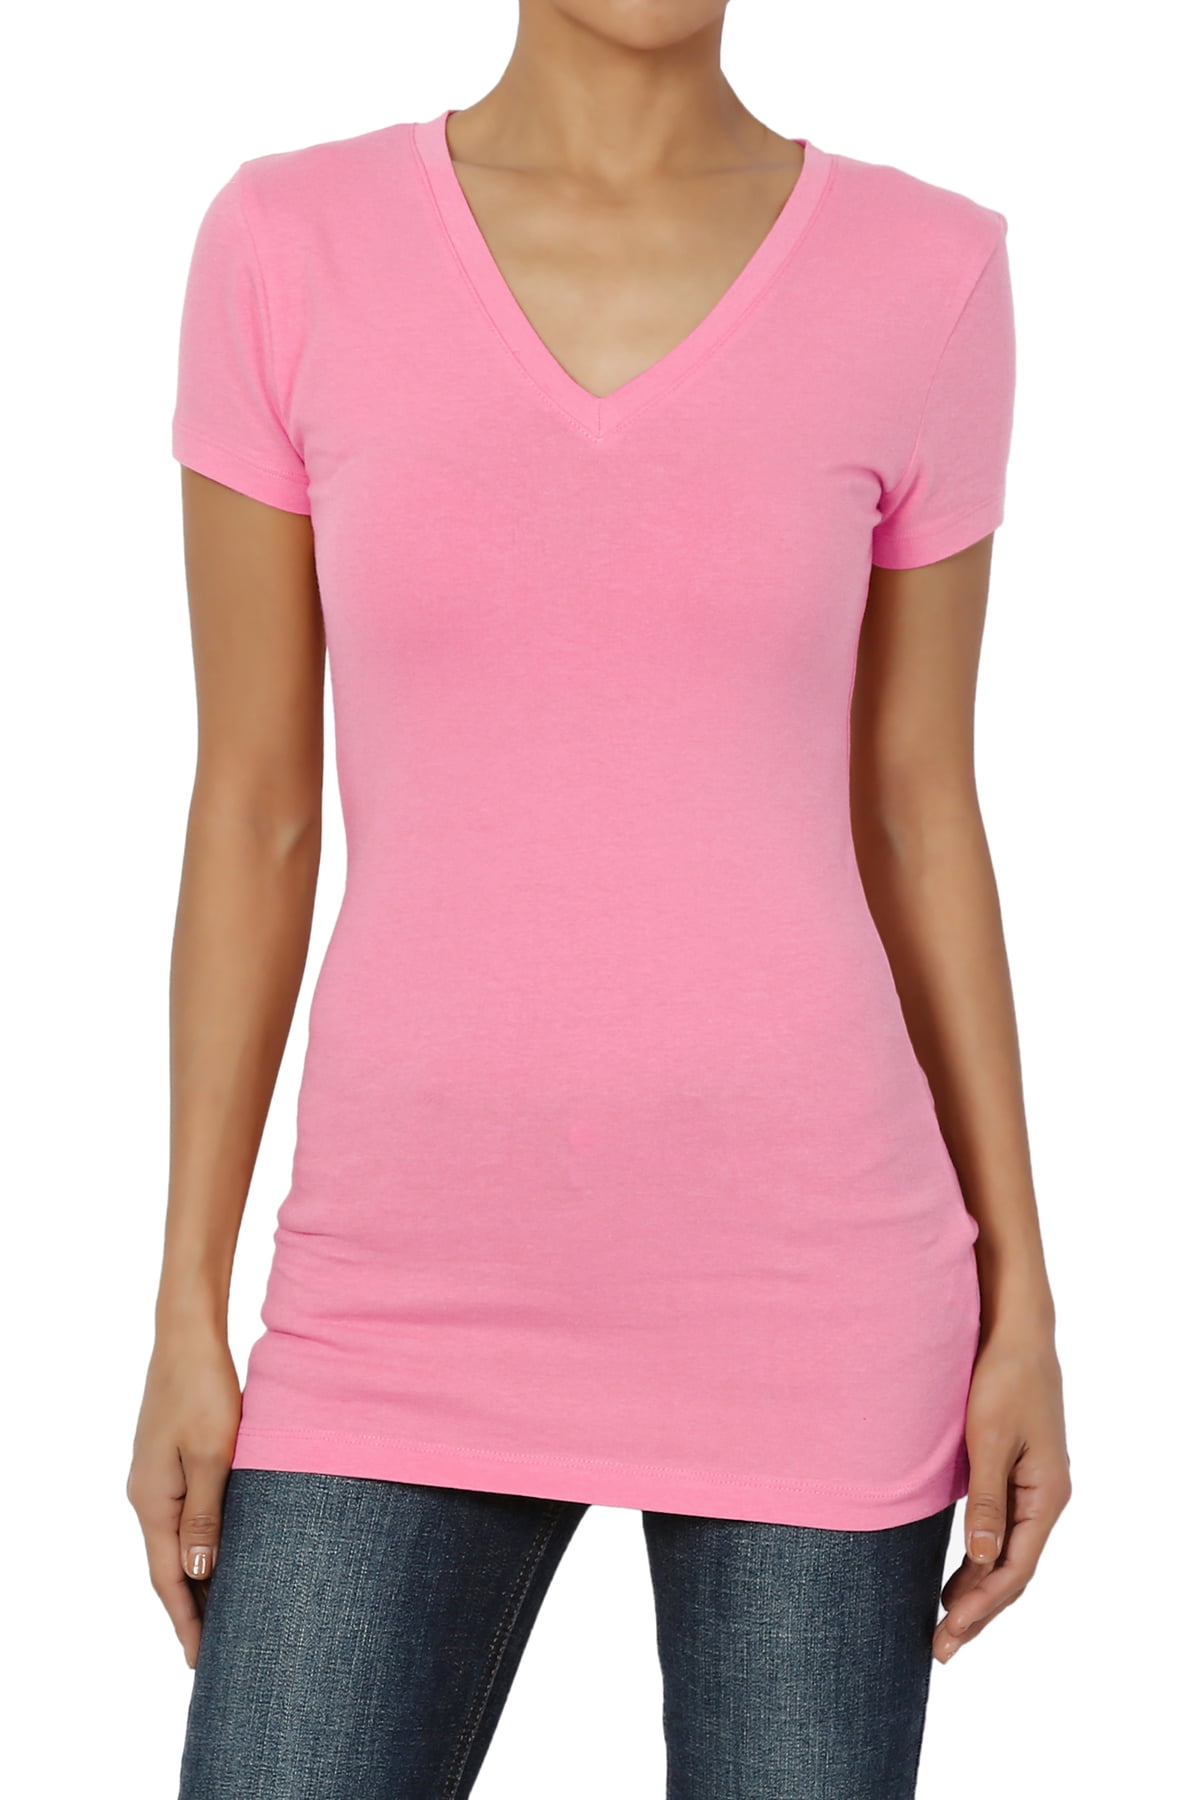 TheMogan Women's Plain Basic V-Neck Slim Fitted Short Sleeve T-Shirts ...